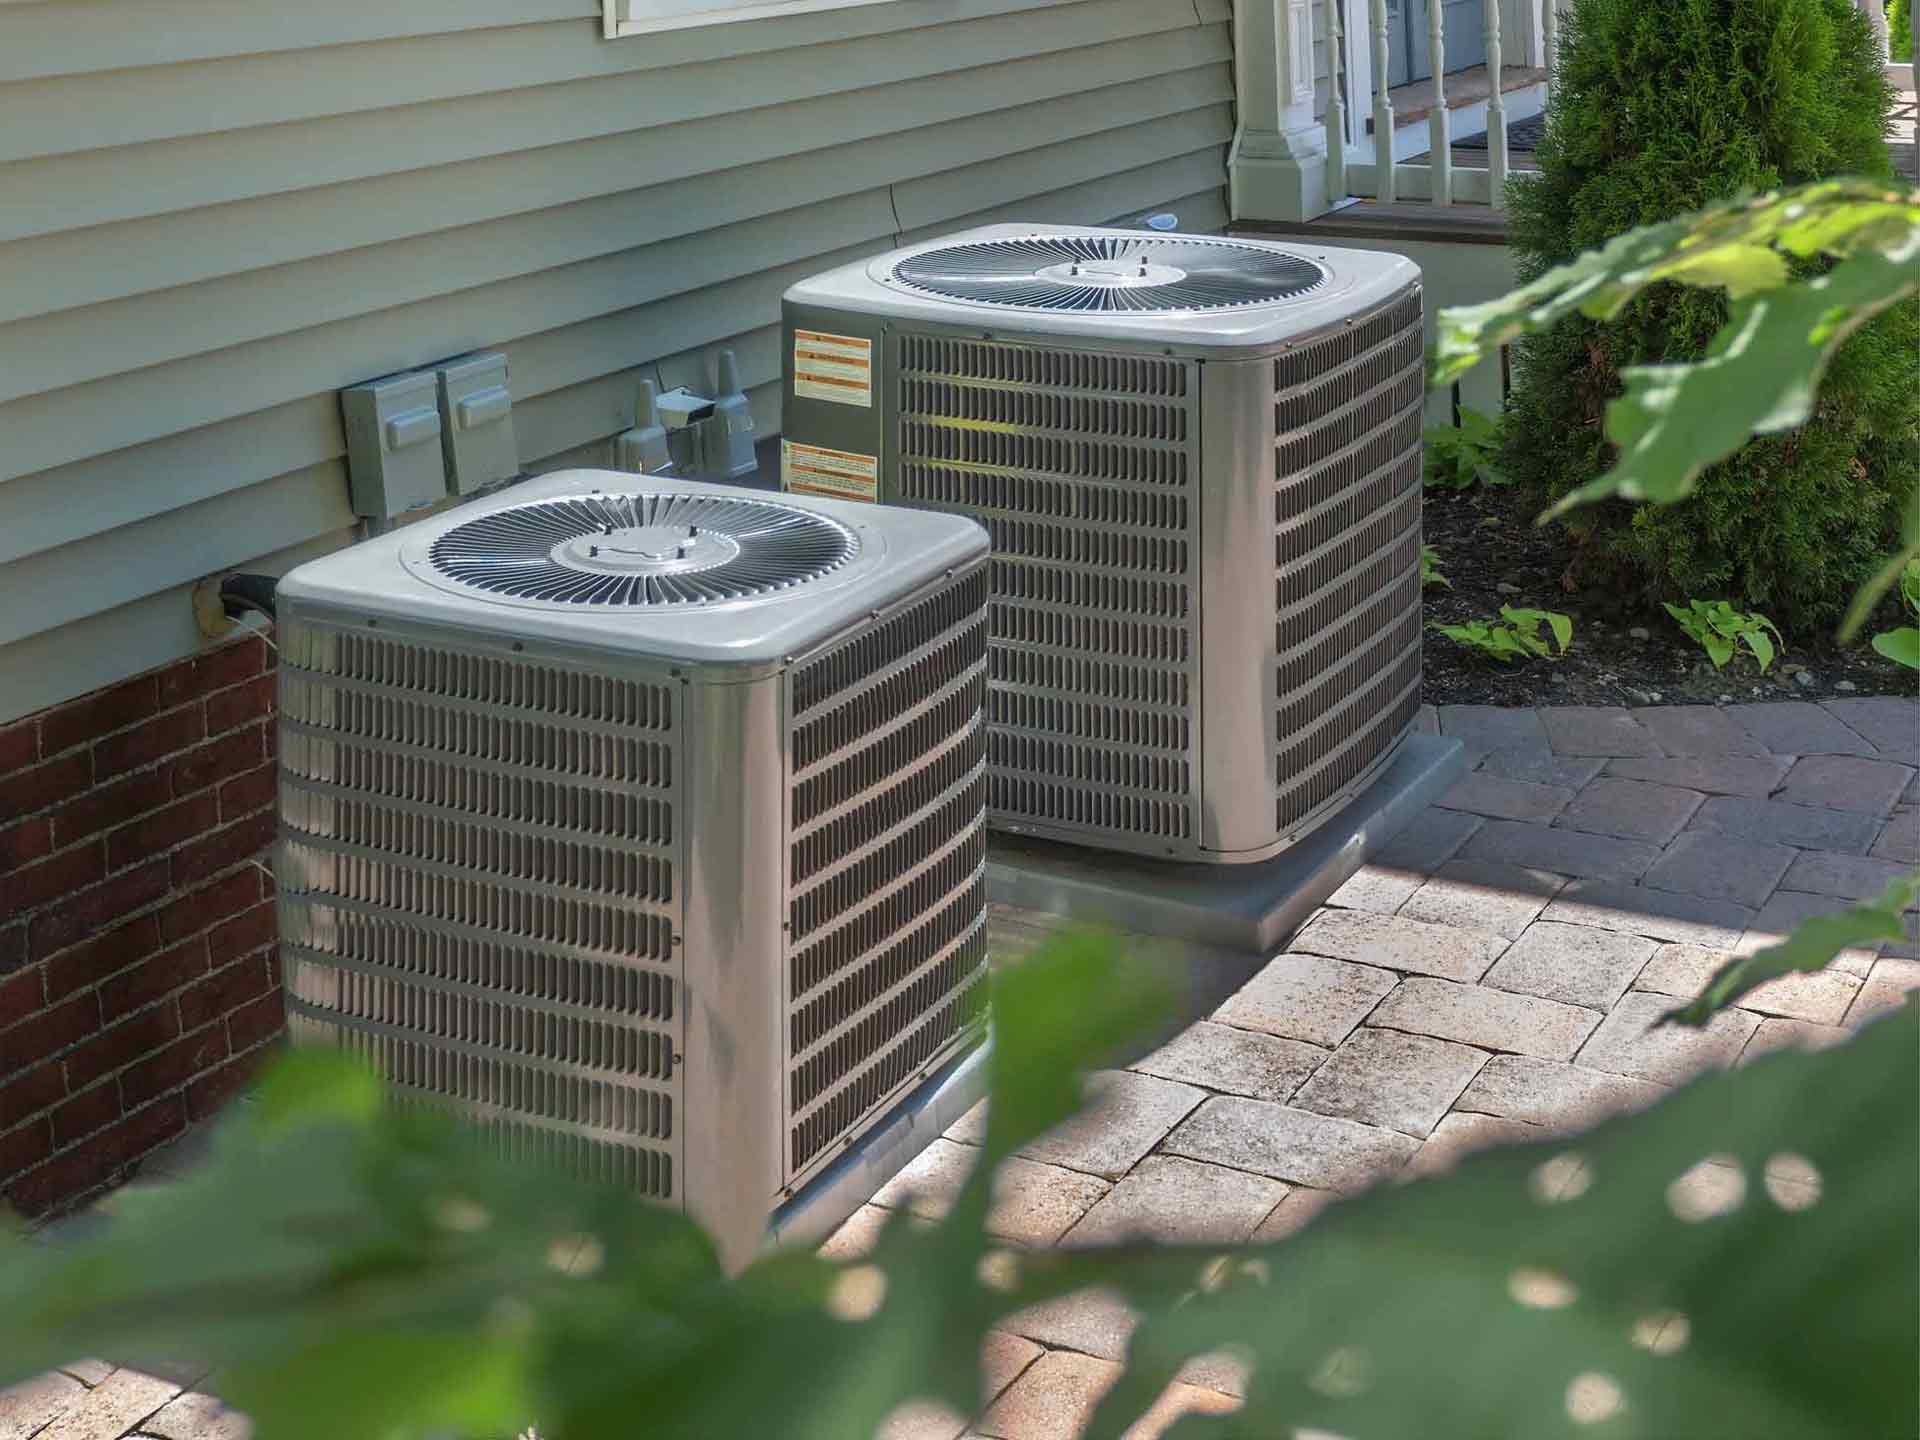 r132-air-conditioner-heat-pump-units-outside-home-16802750685355.jpg